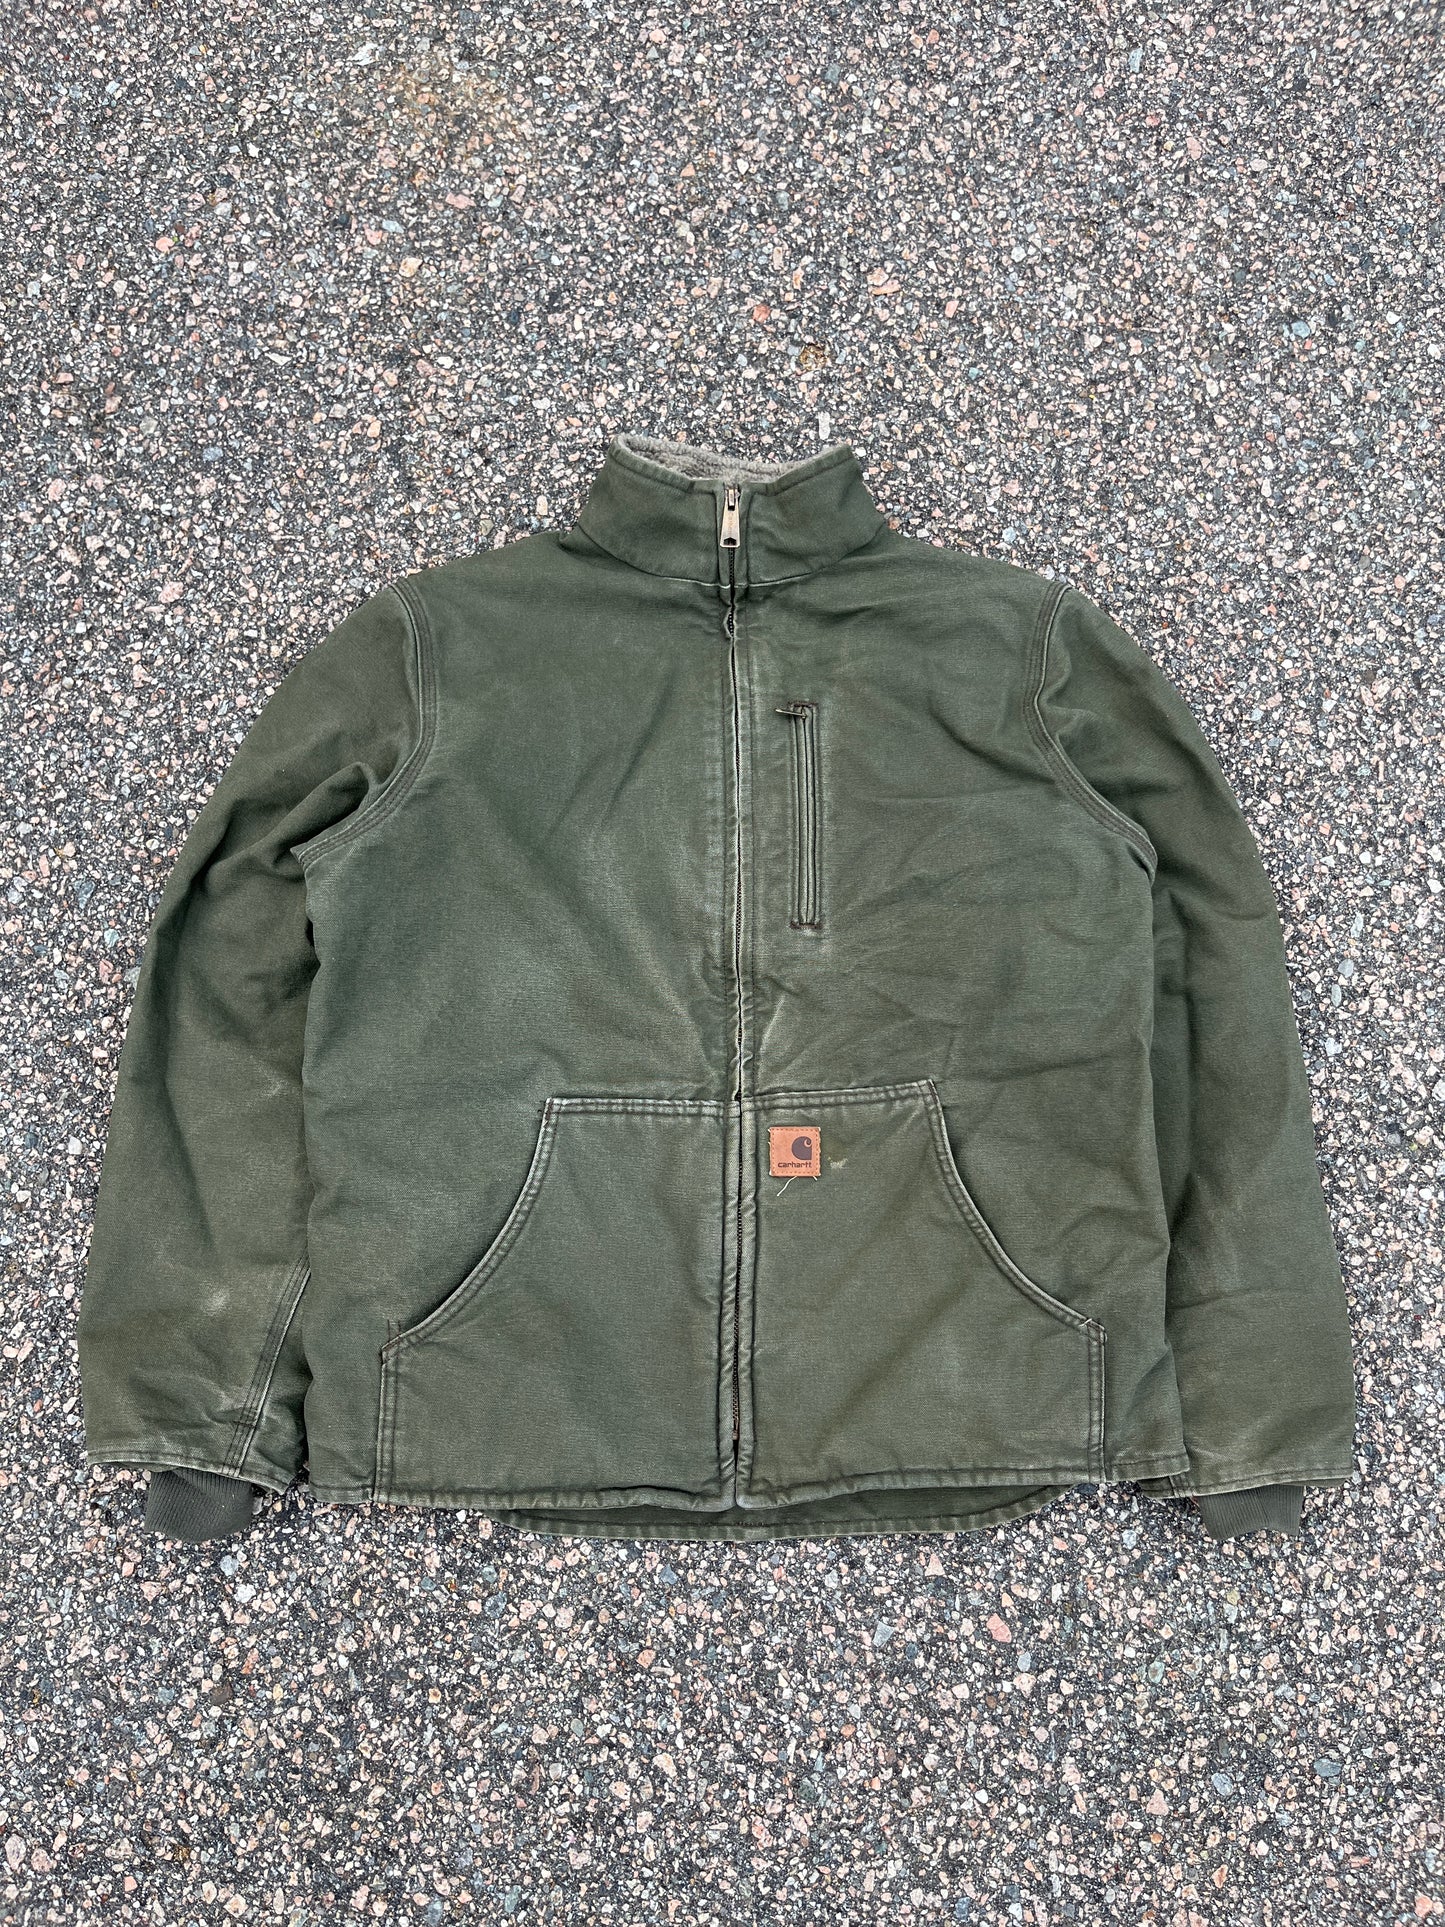 Faded Green Carhartt Sherpa Lined Jacket - Medium